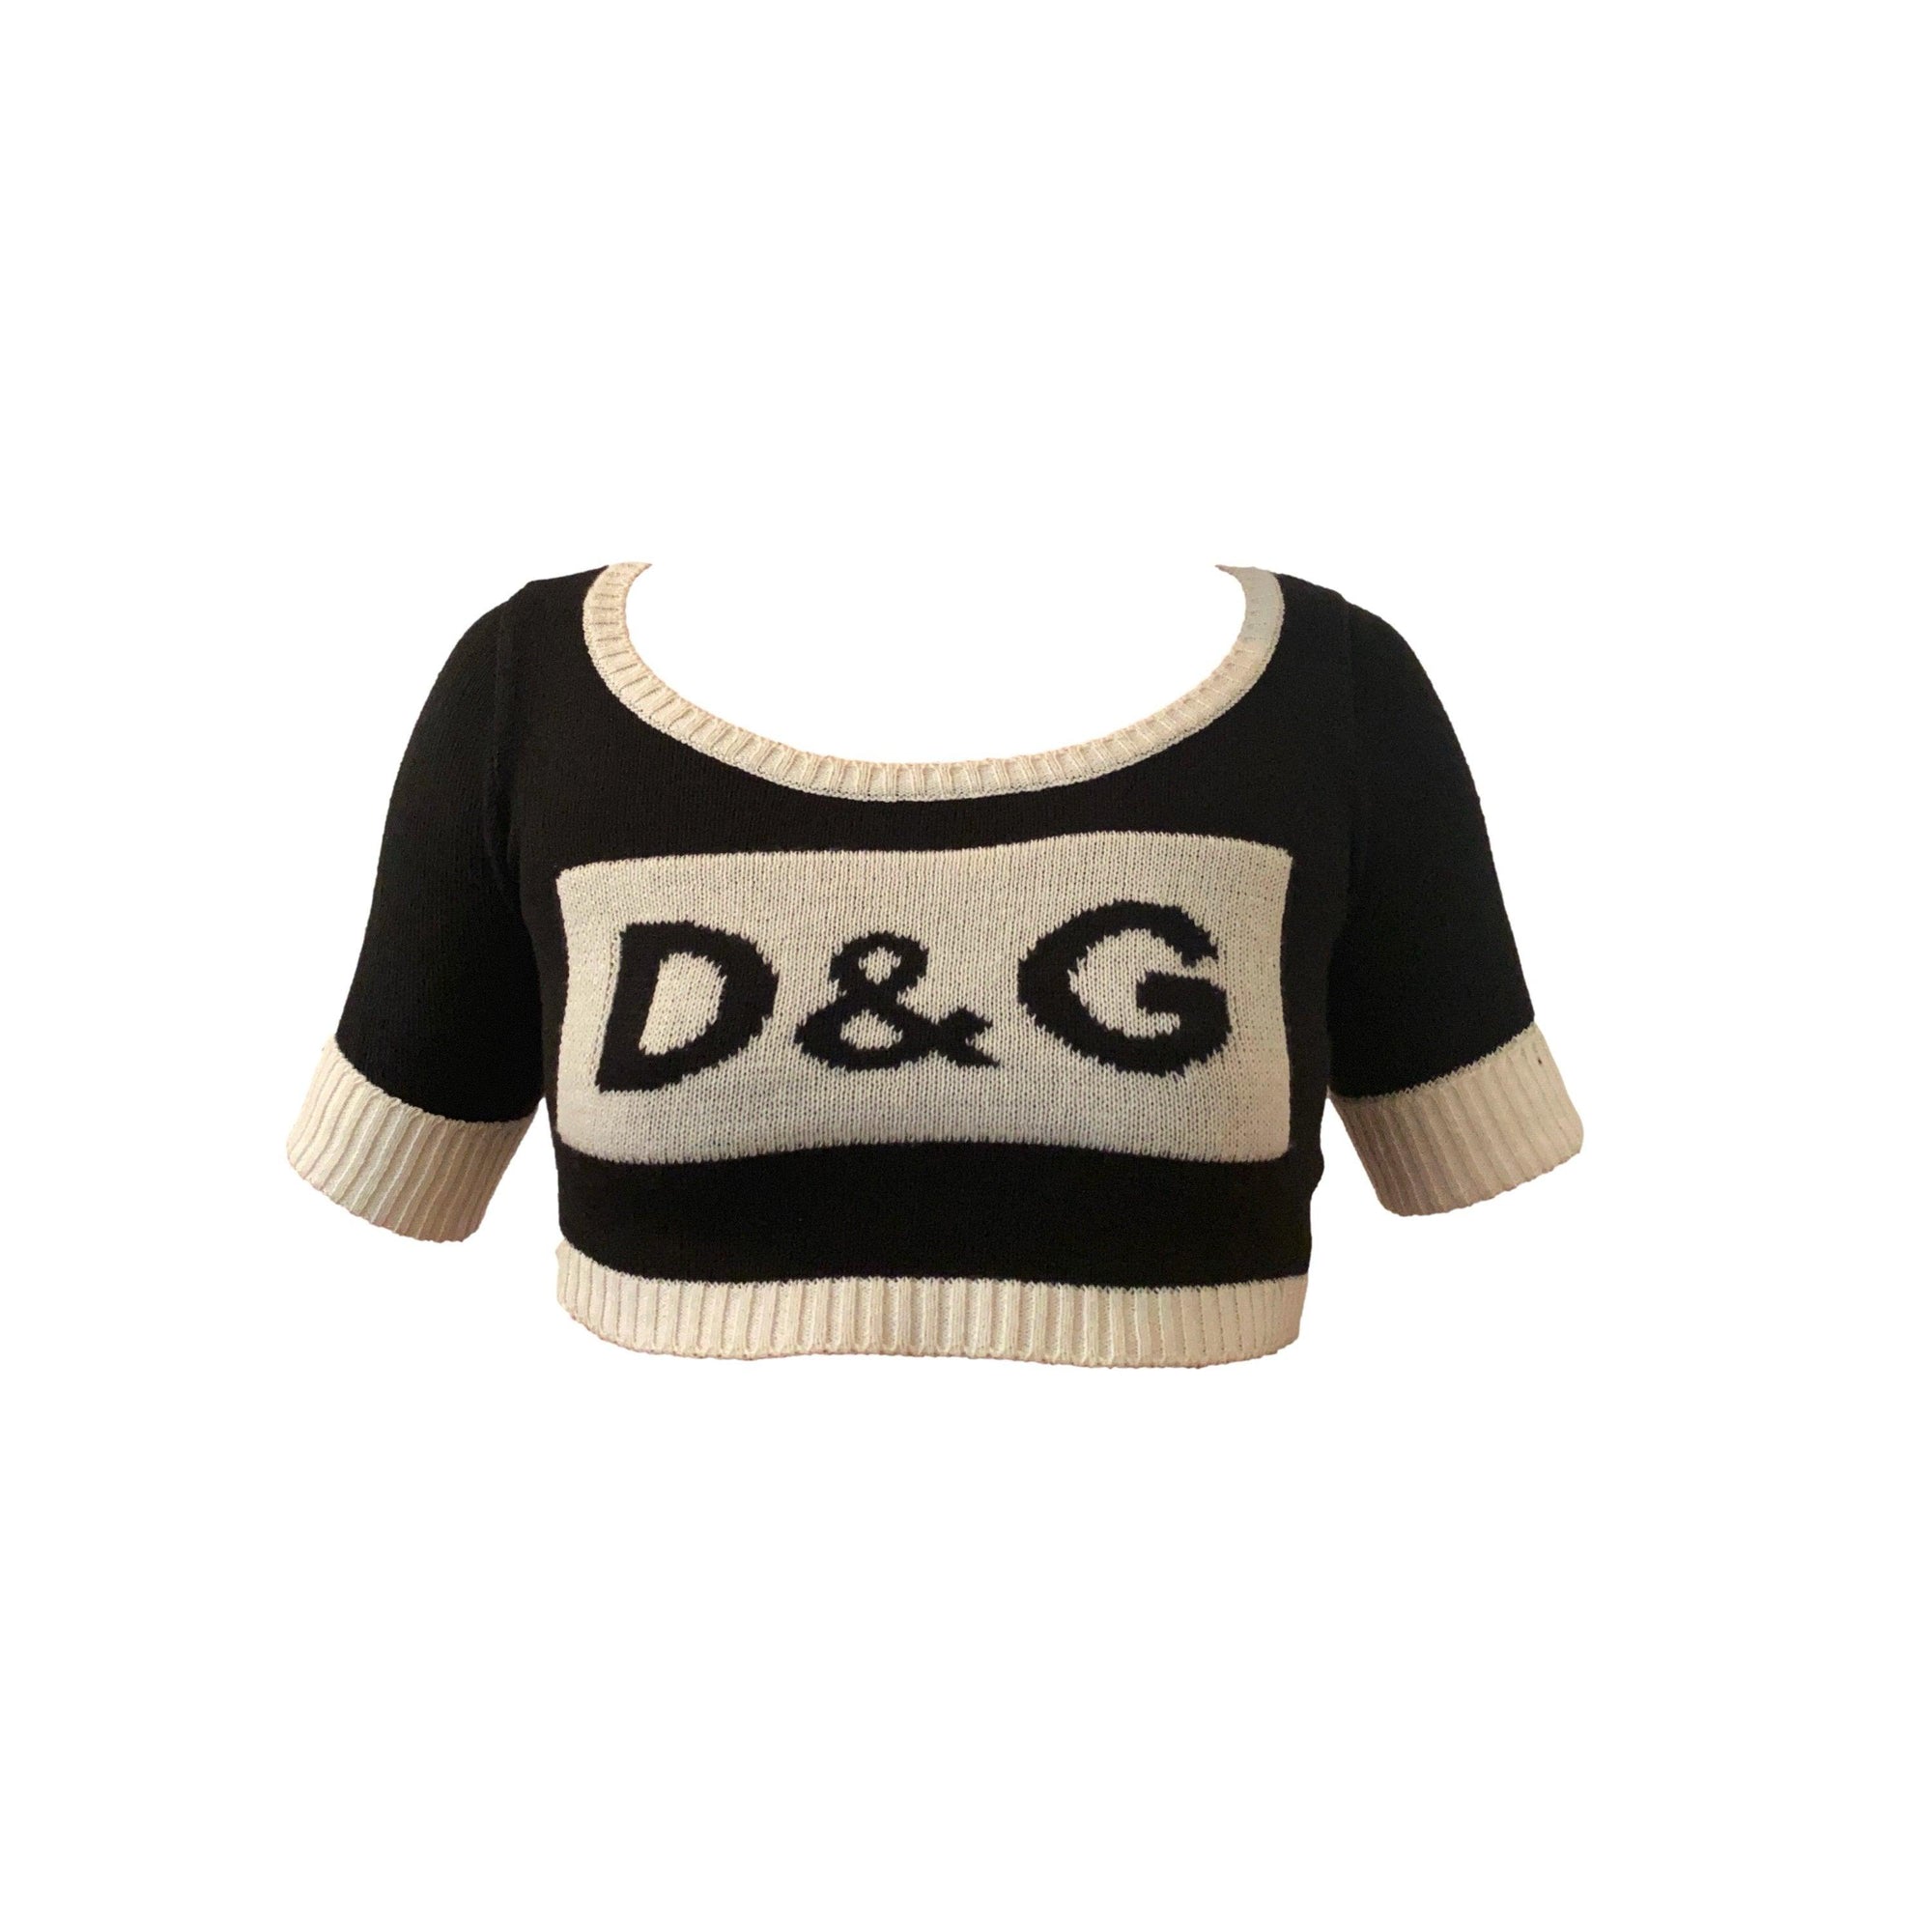 Dolce & Gabbana Black Knitted Crop Top - Apparel